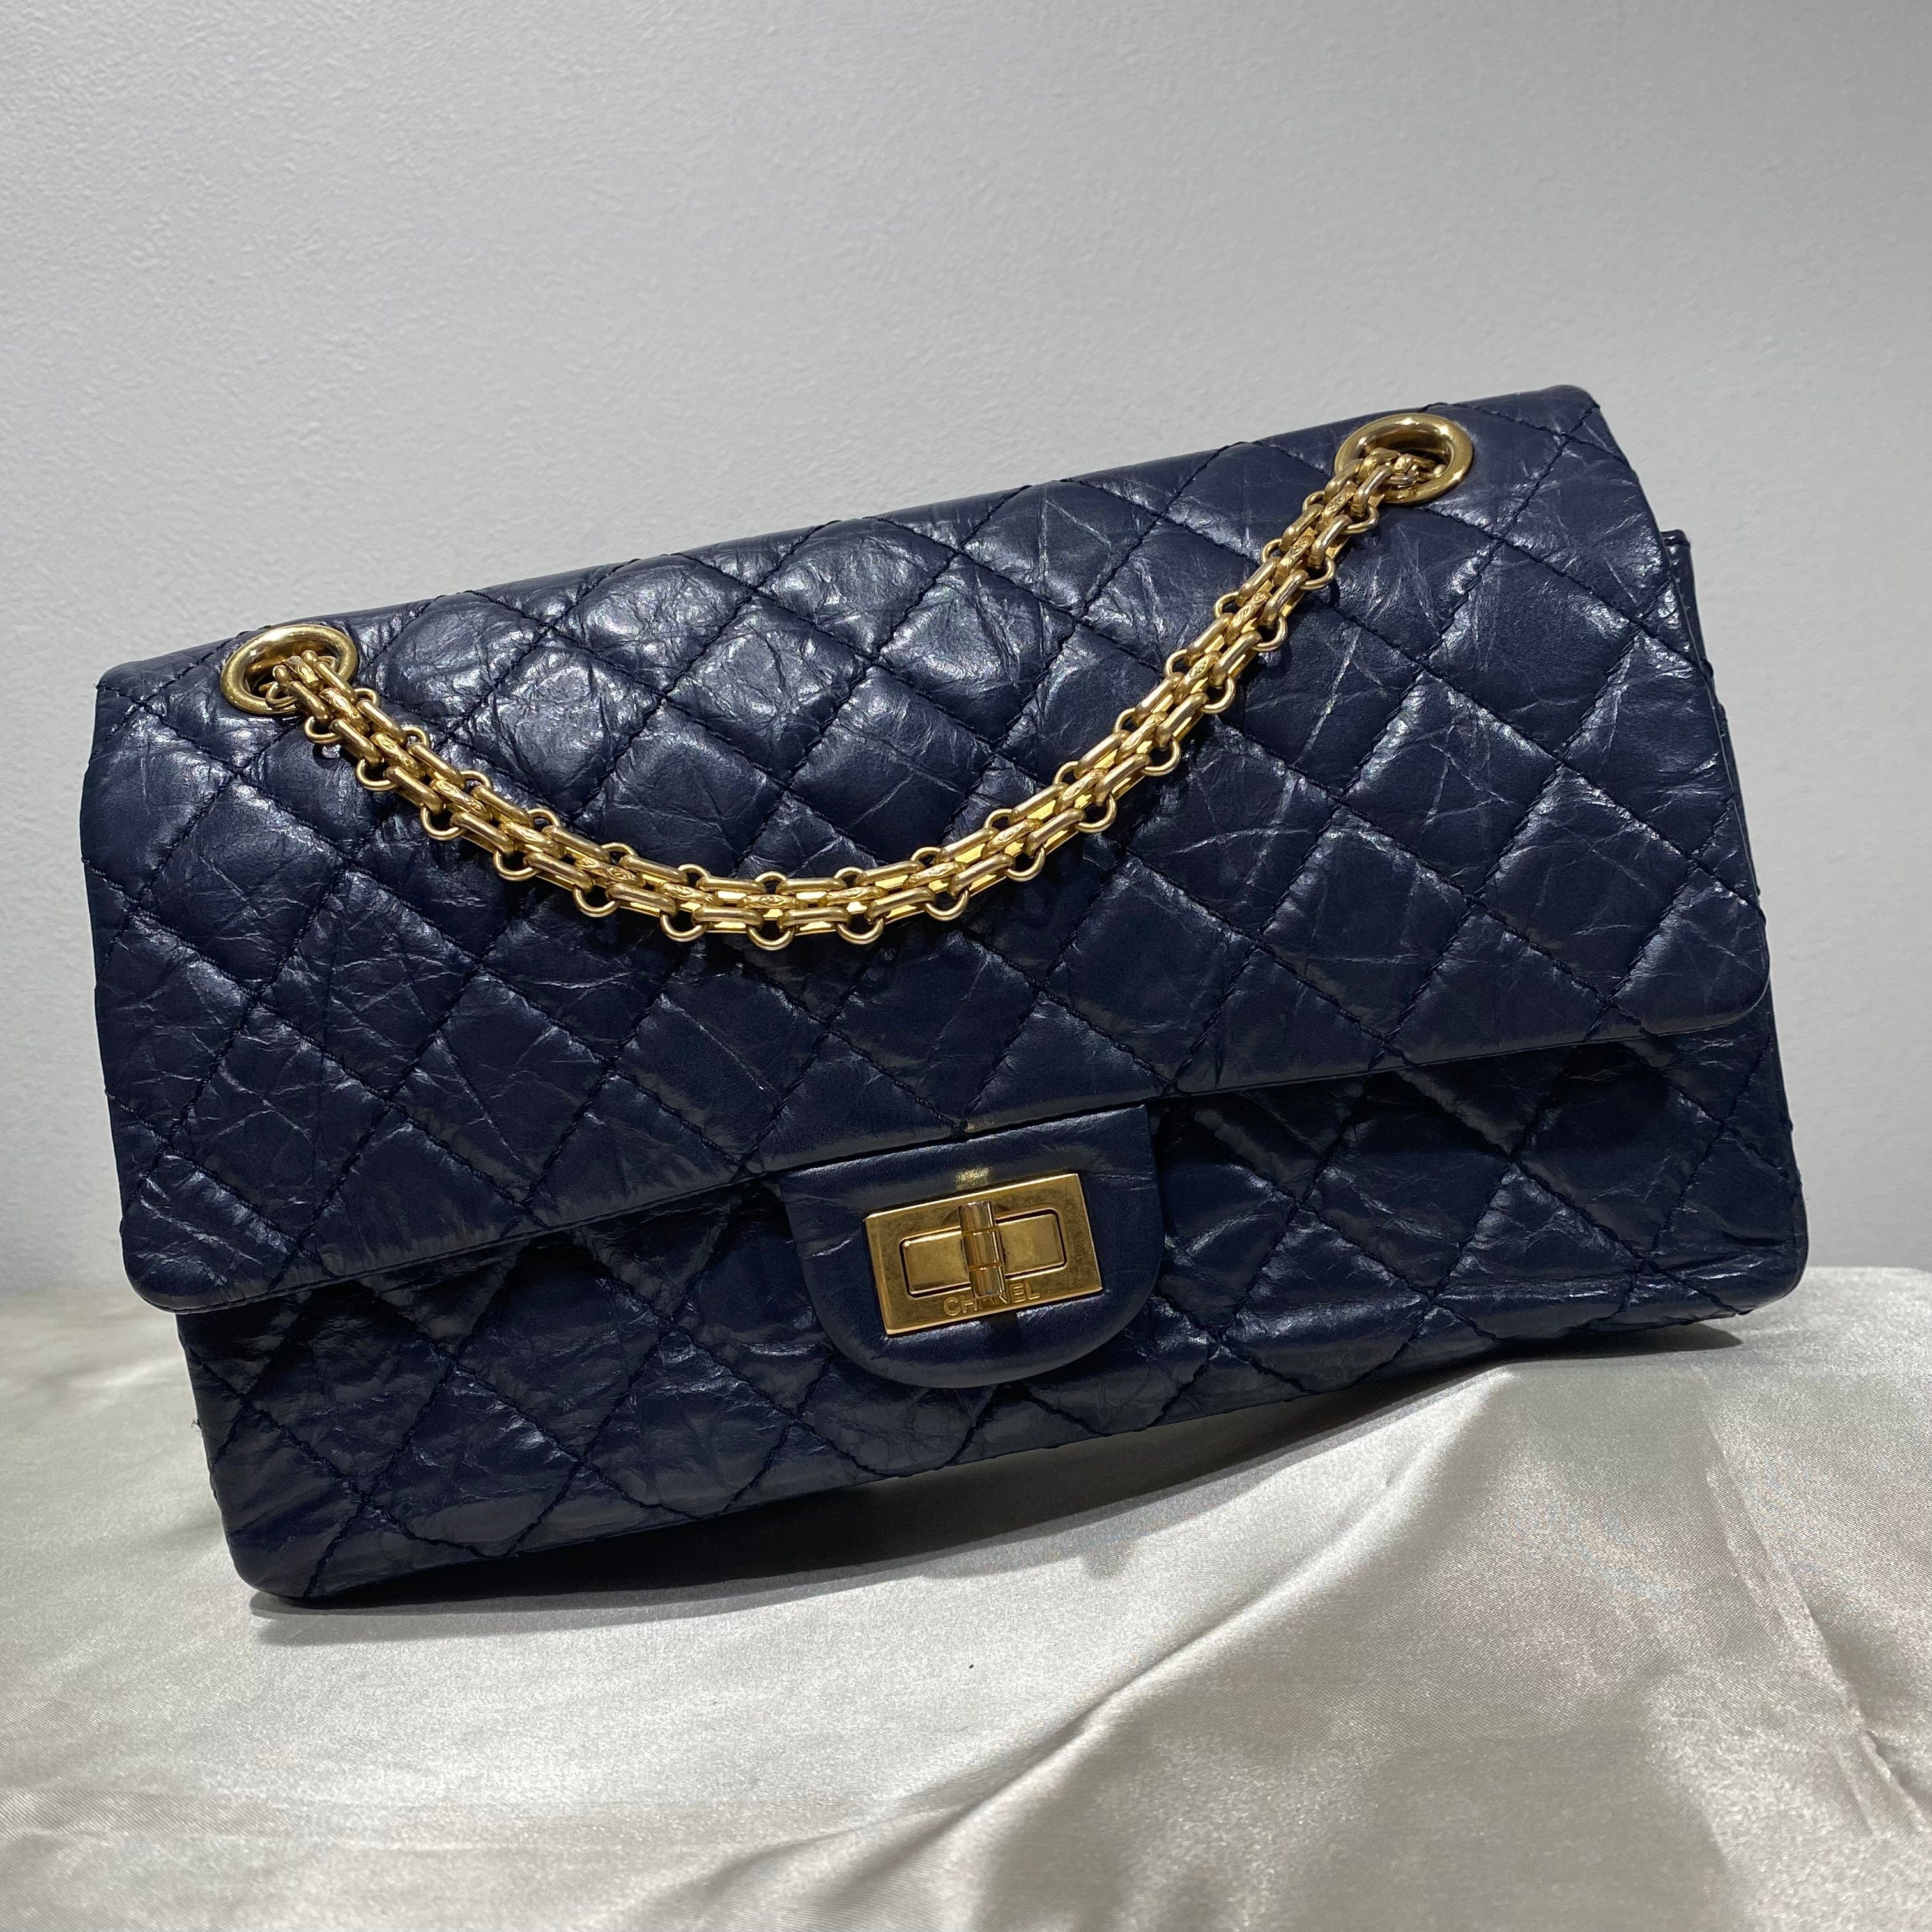 Chanel CHANEL 2.55 CHAIN SHOULDER BAG NAVY CALF SKIN 90191349